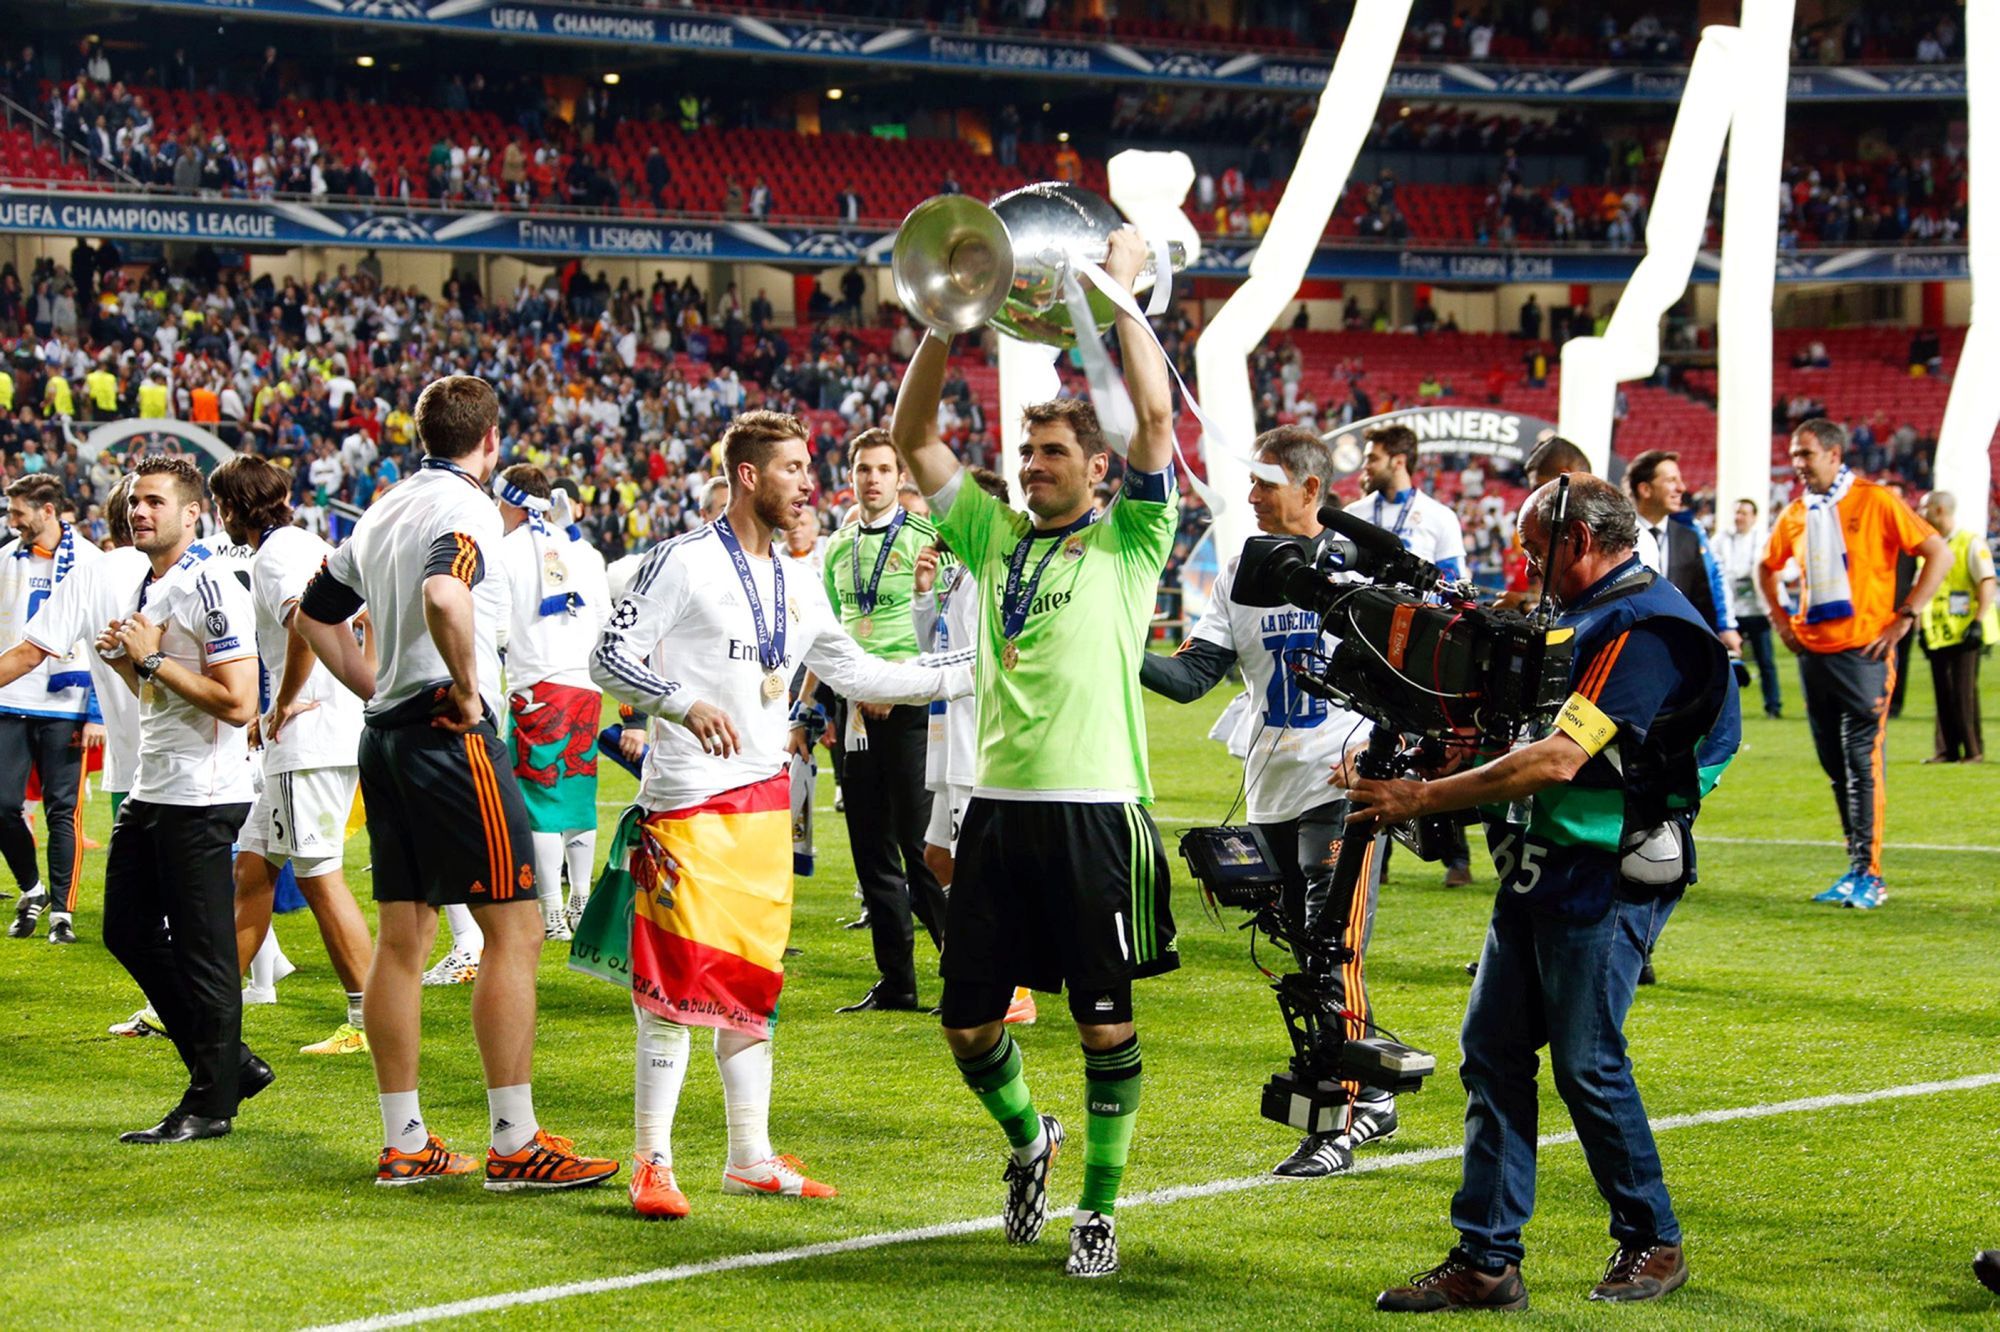 Victoire Real Madrid - Iker Casillas - 24.05.2014 - Football - Atletico Madrid / Real Madrid - Finale Champions League -Lisbonne